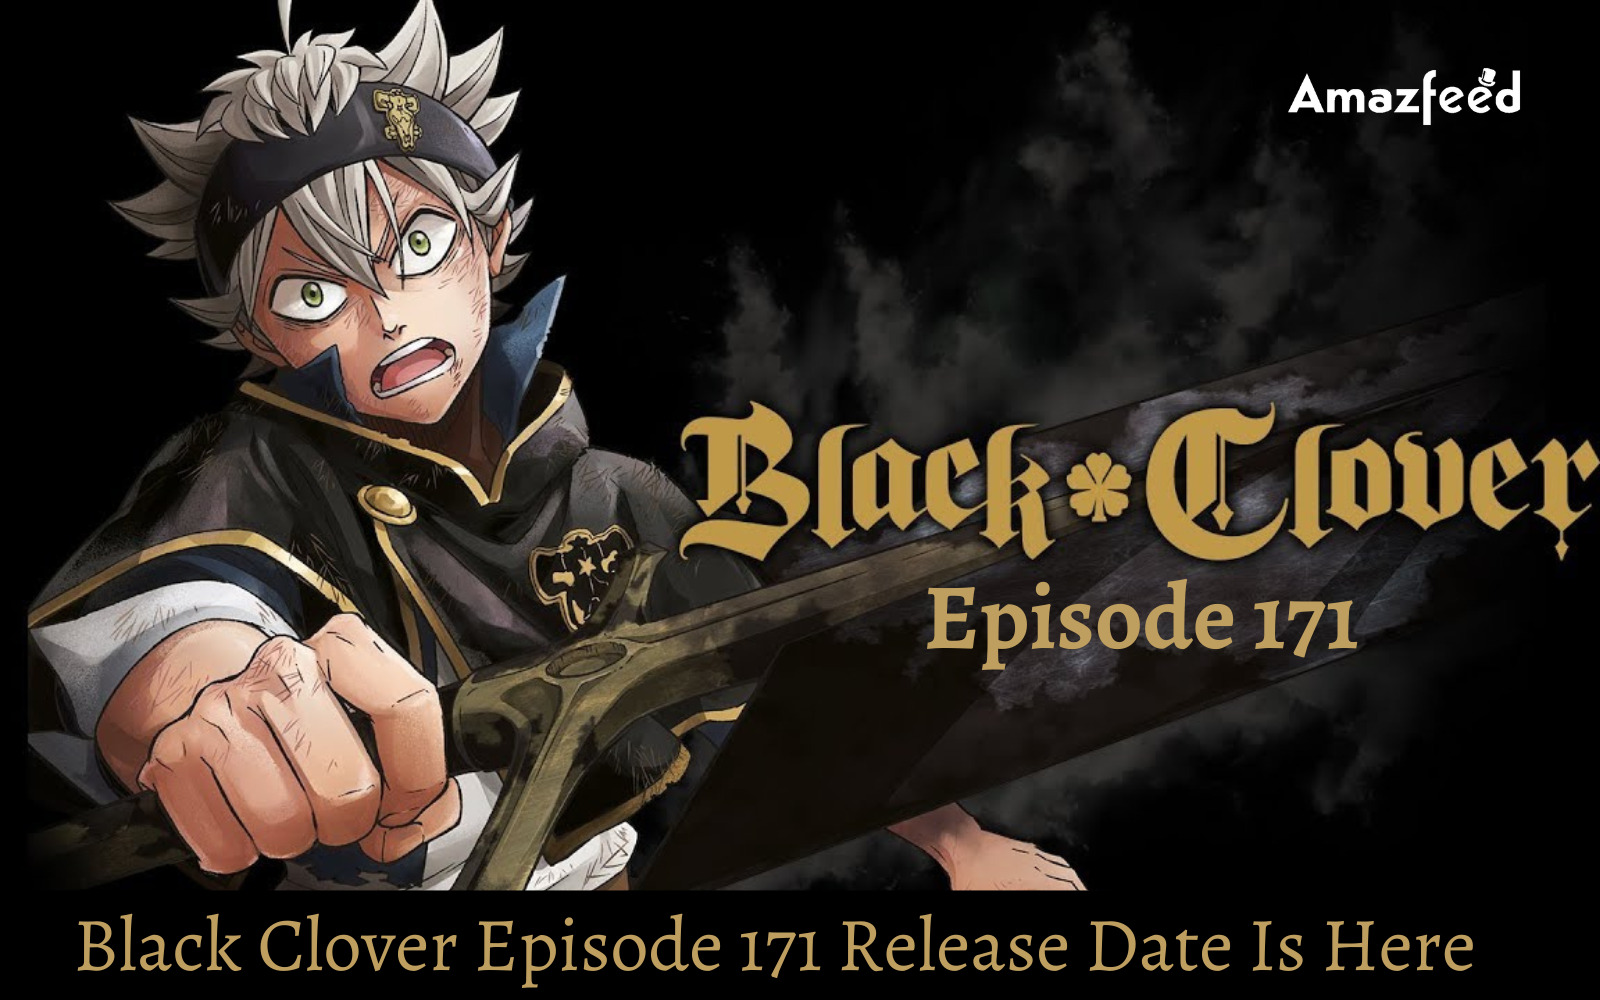 Black Clover Episode 171 Release Date